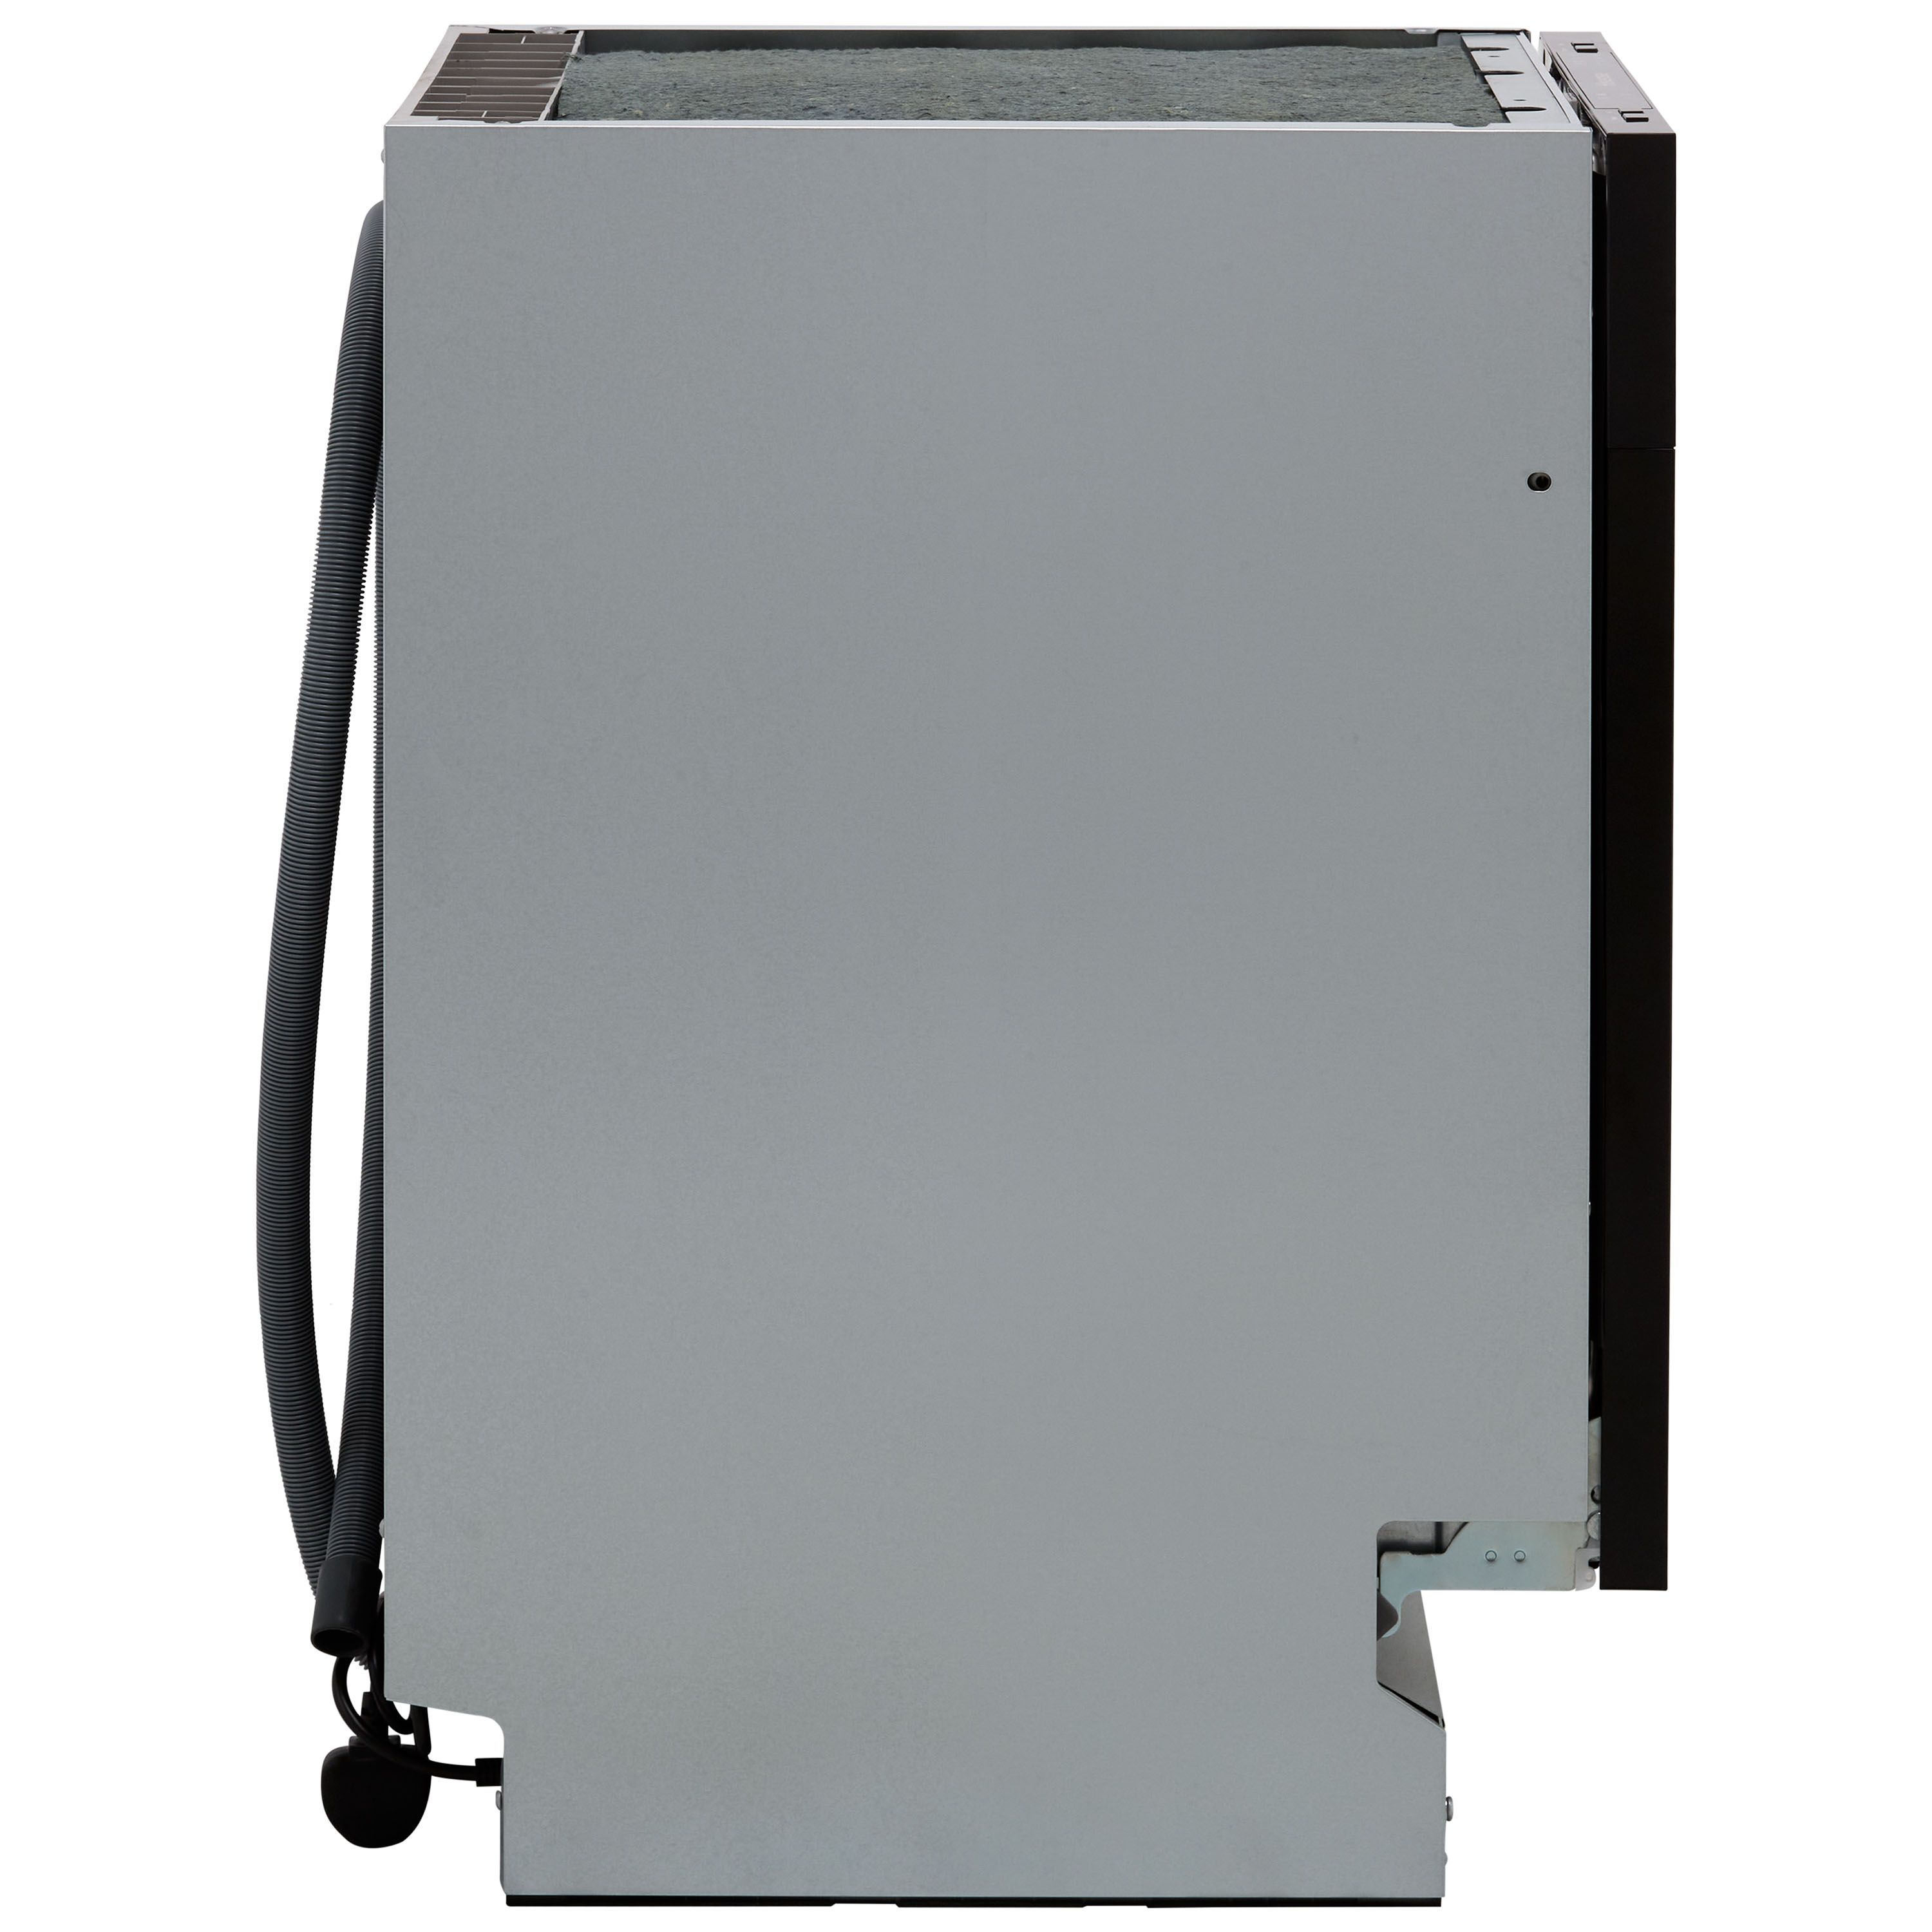 Hisense HV520E40UK Integrated Slimline Dishwasher - Black